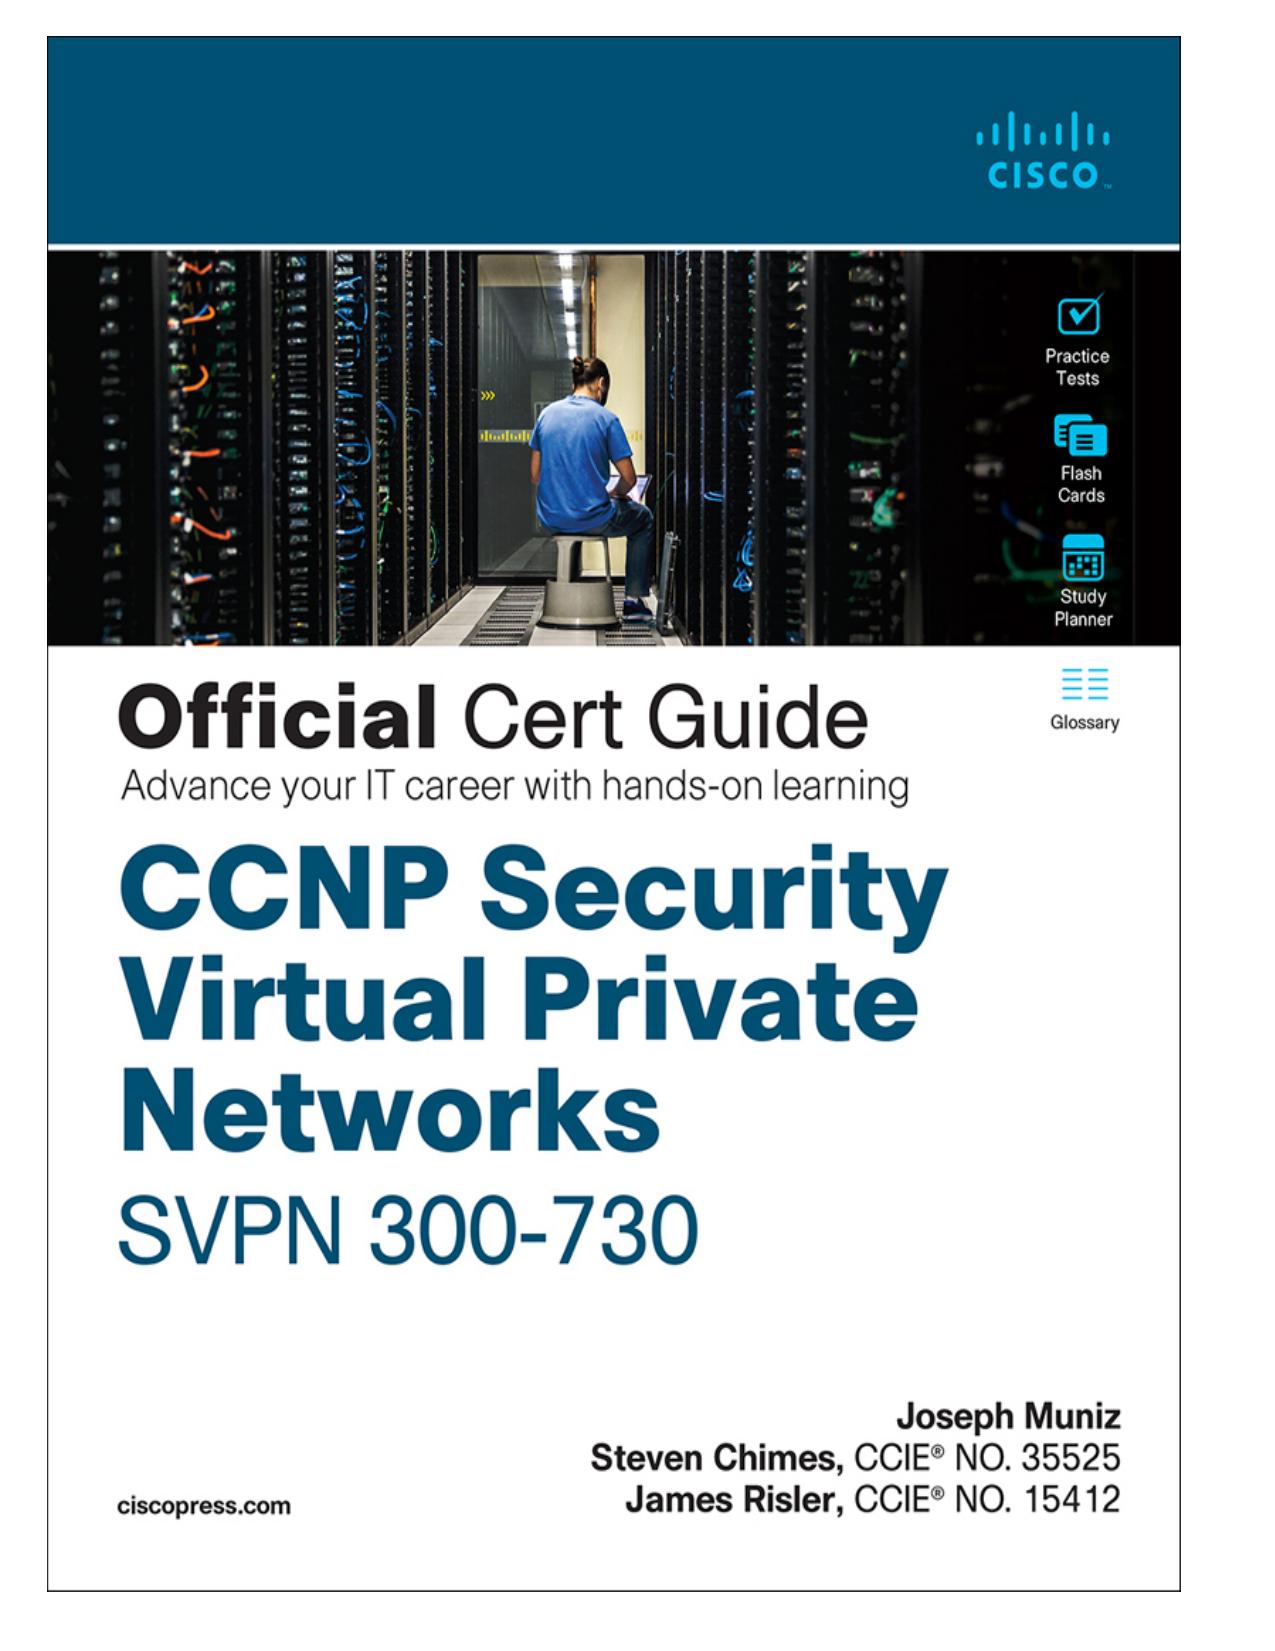 CCNP Security Virtual Private Networks SVPN 300-730 Official Cert Guide by Joseph Muniz & Steven Chimes & James Risler